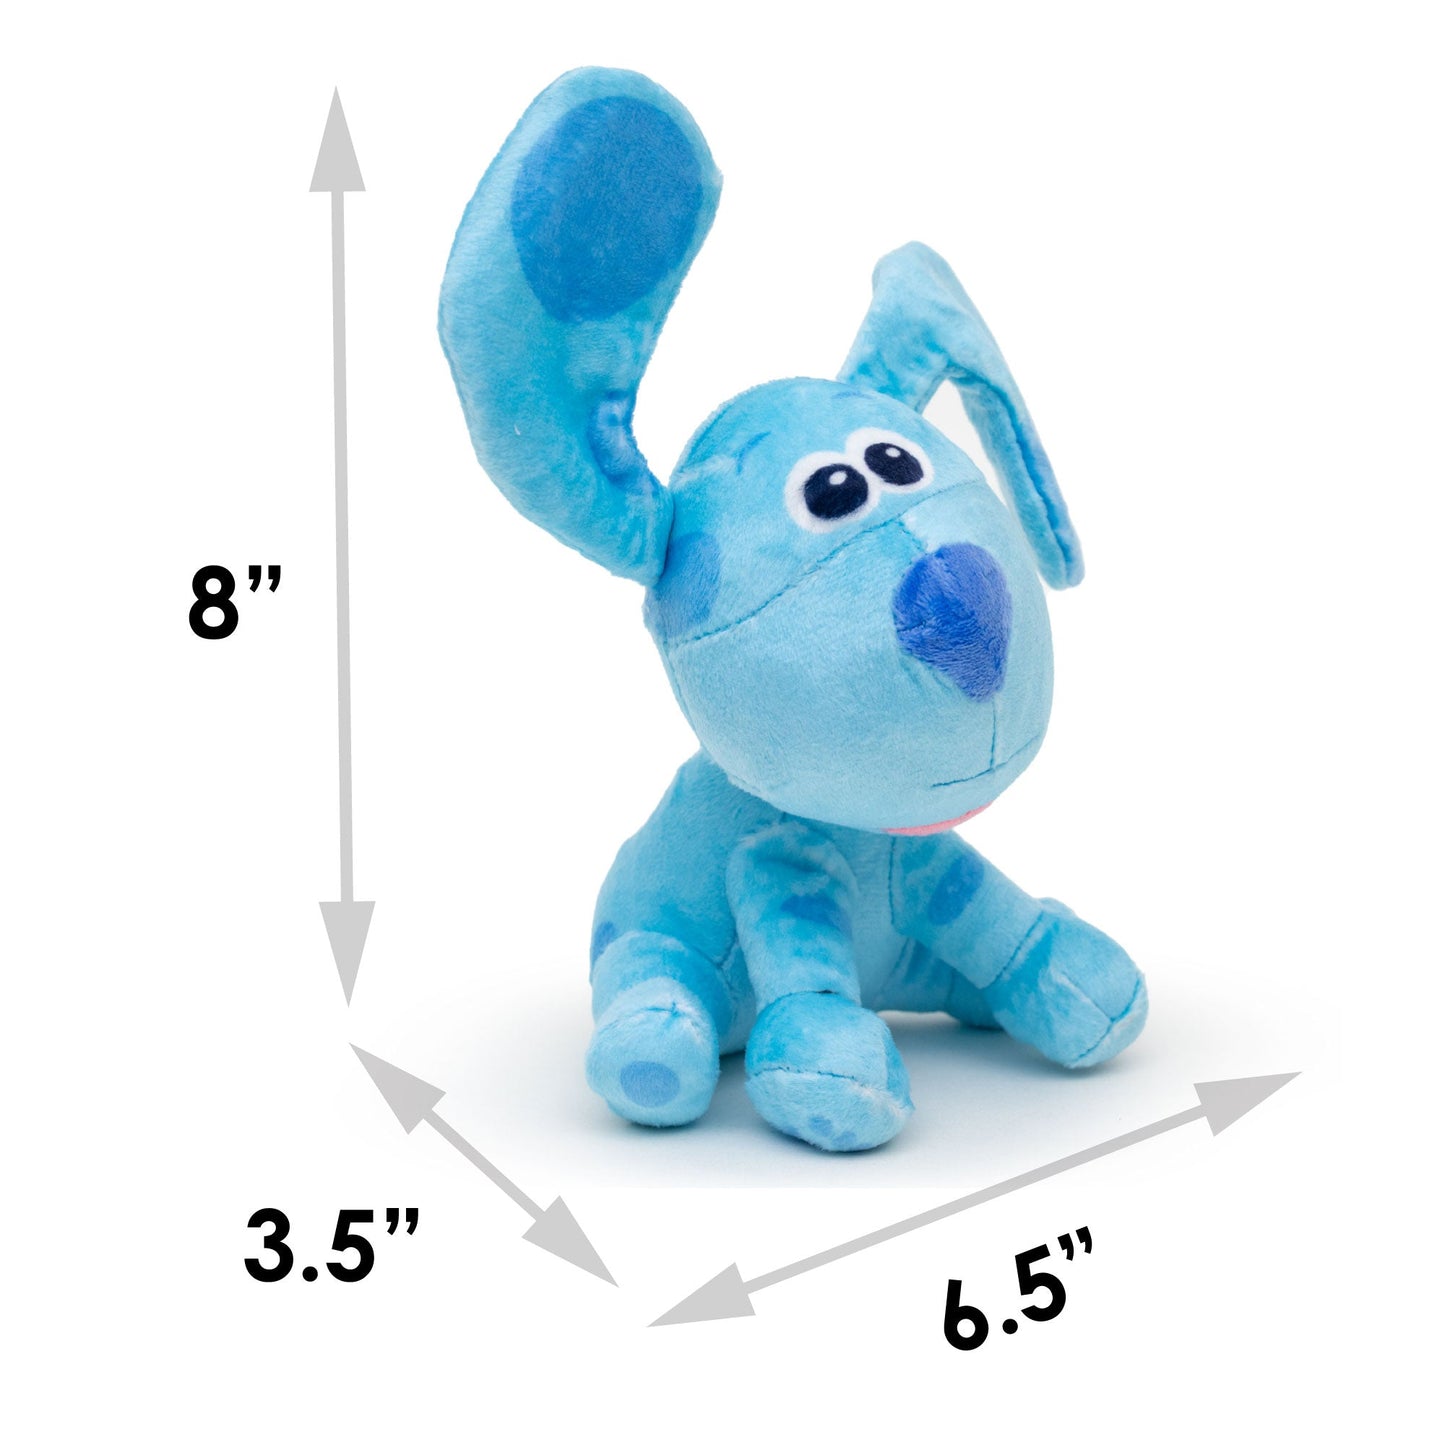 Dog Toy Squeaker Plush - Blue's Clues Blue Full Body Sitting Pose